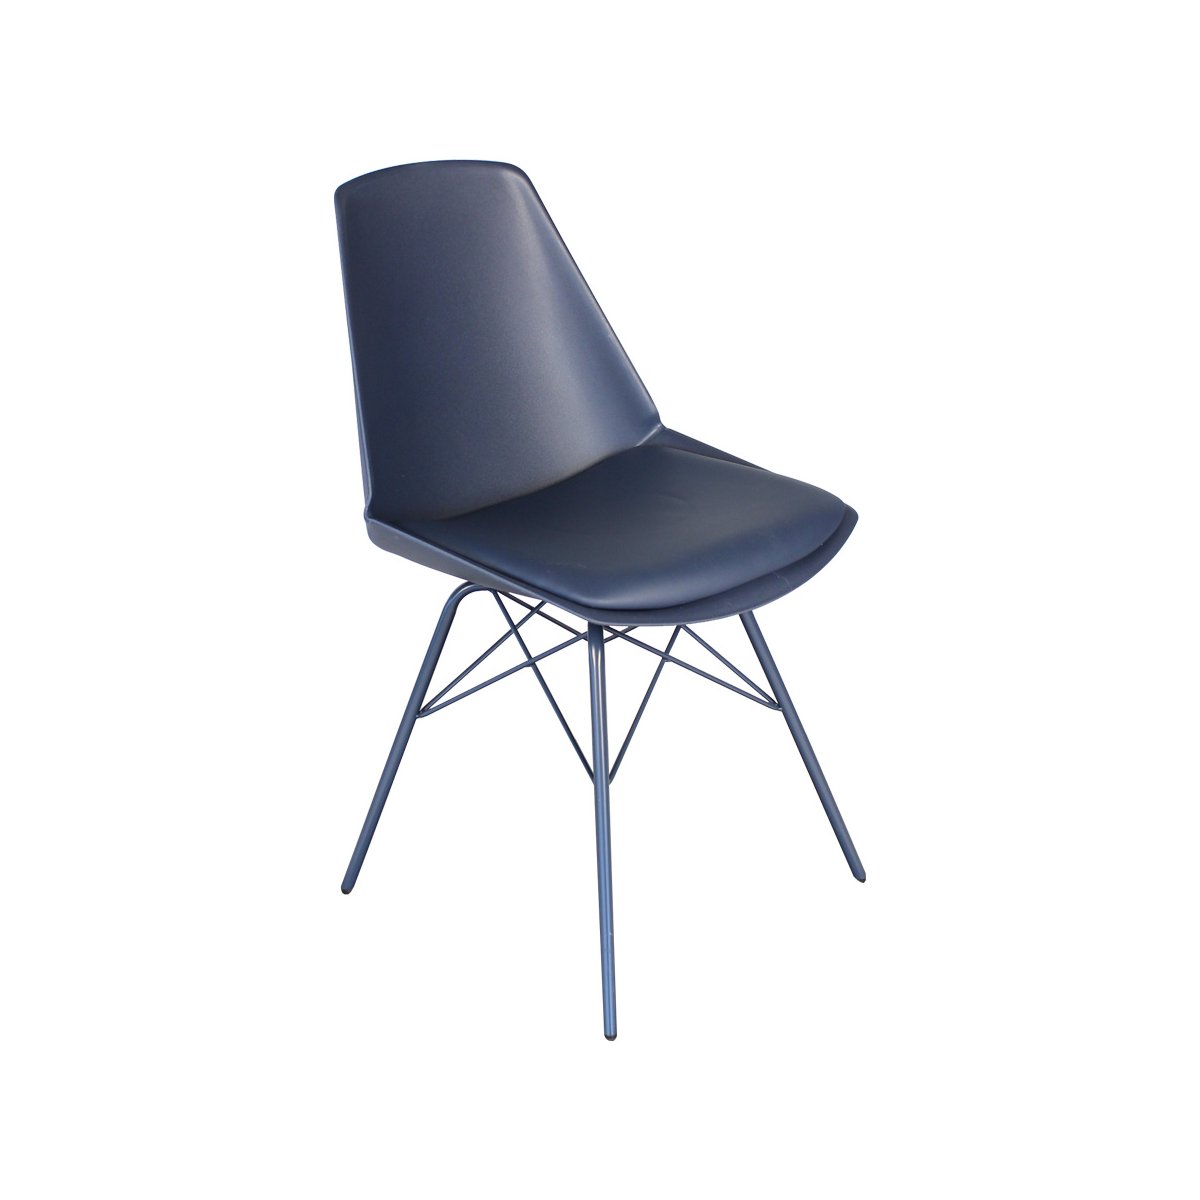 2 chaises design - pieds métal bleu